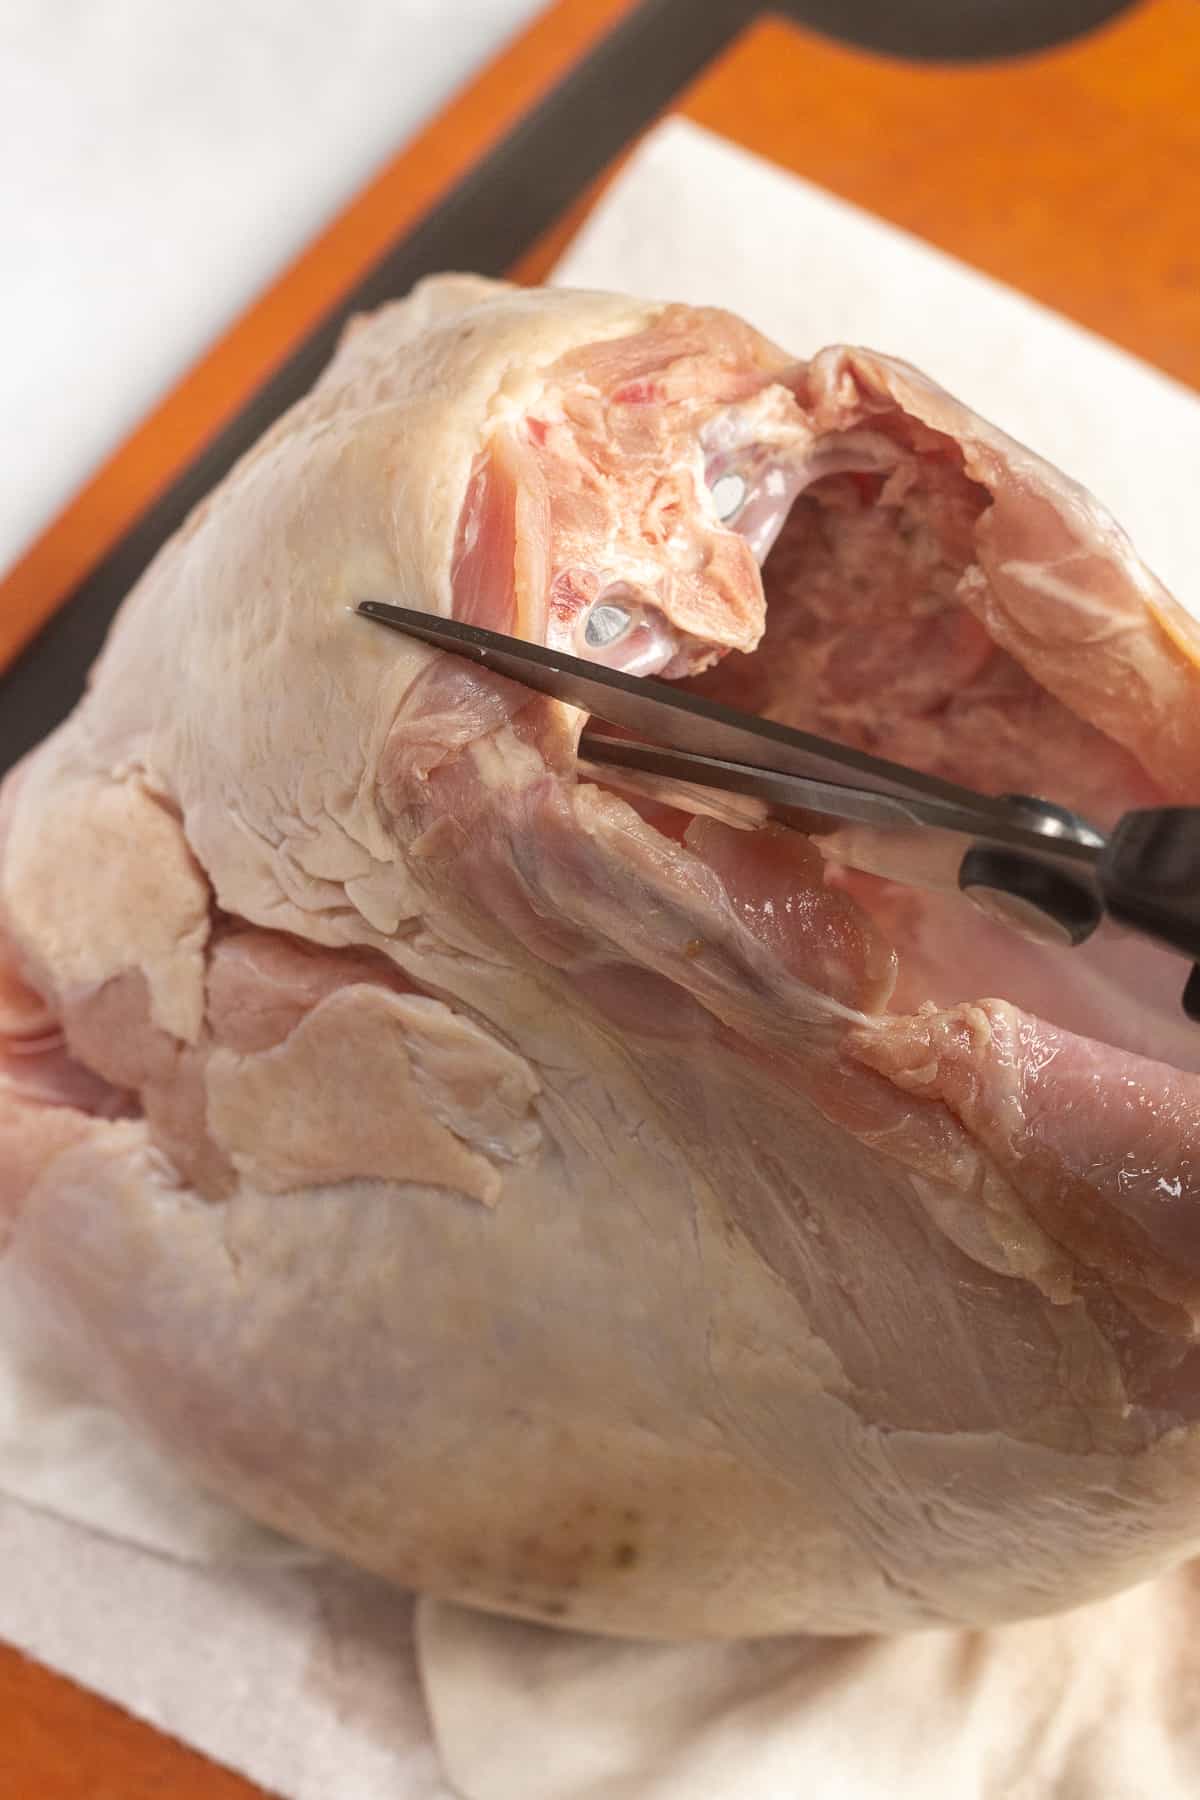 A pair of shears cutting into raw turkey breast